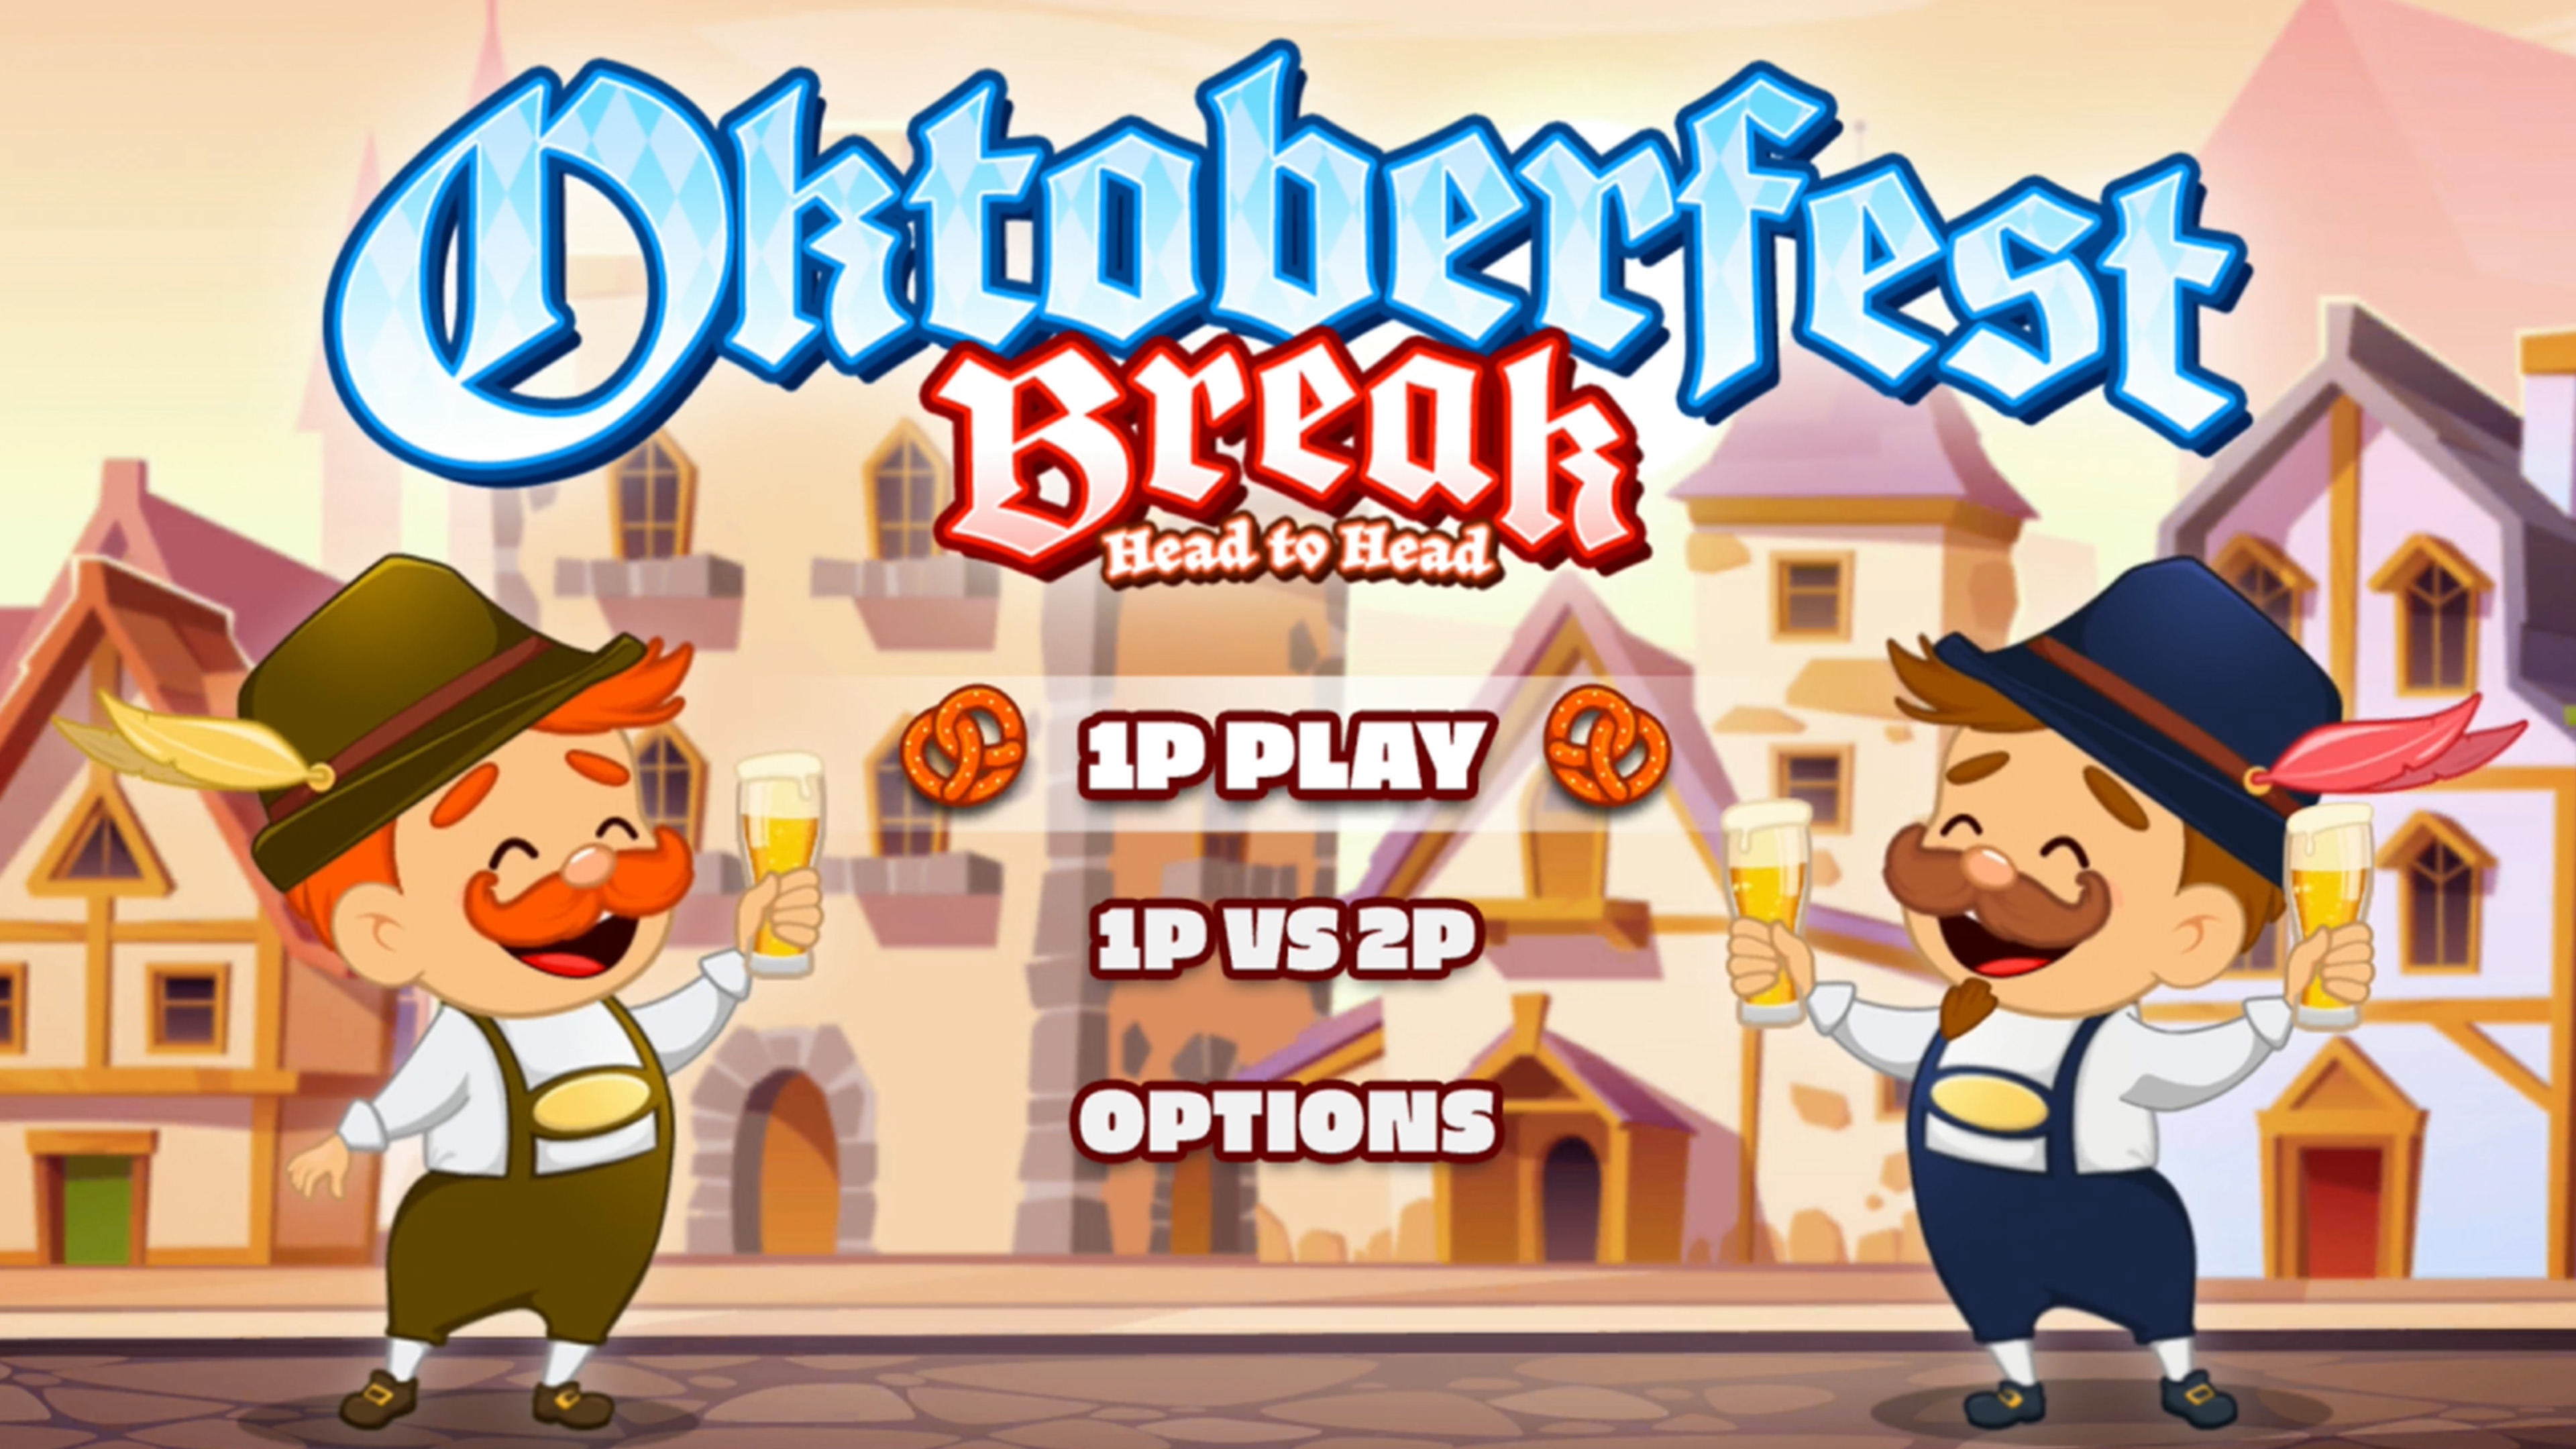 Скриншот №1 к Oktoberfest Break Head to Head - Avatar Full Game Bundle